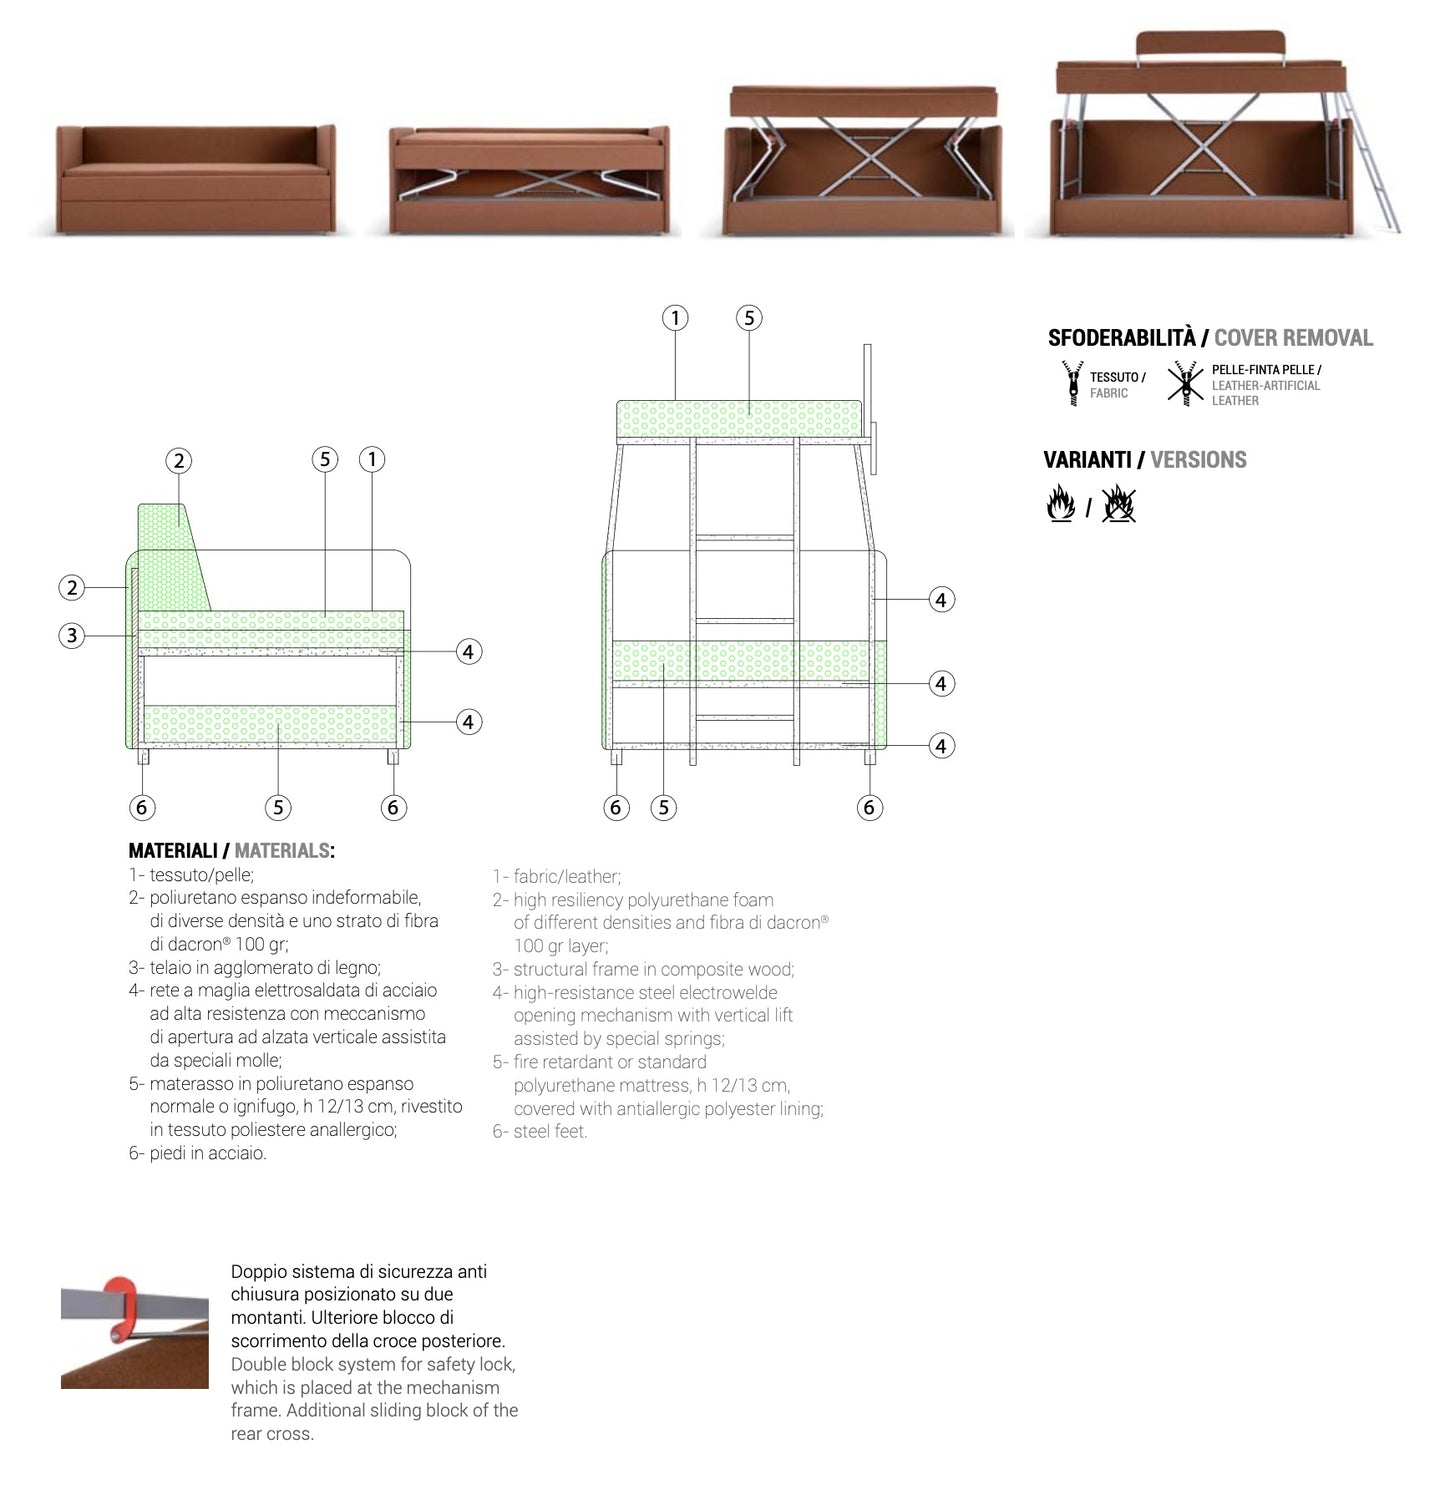 Ermes 3-Seater Sofa by Domingo Salotti